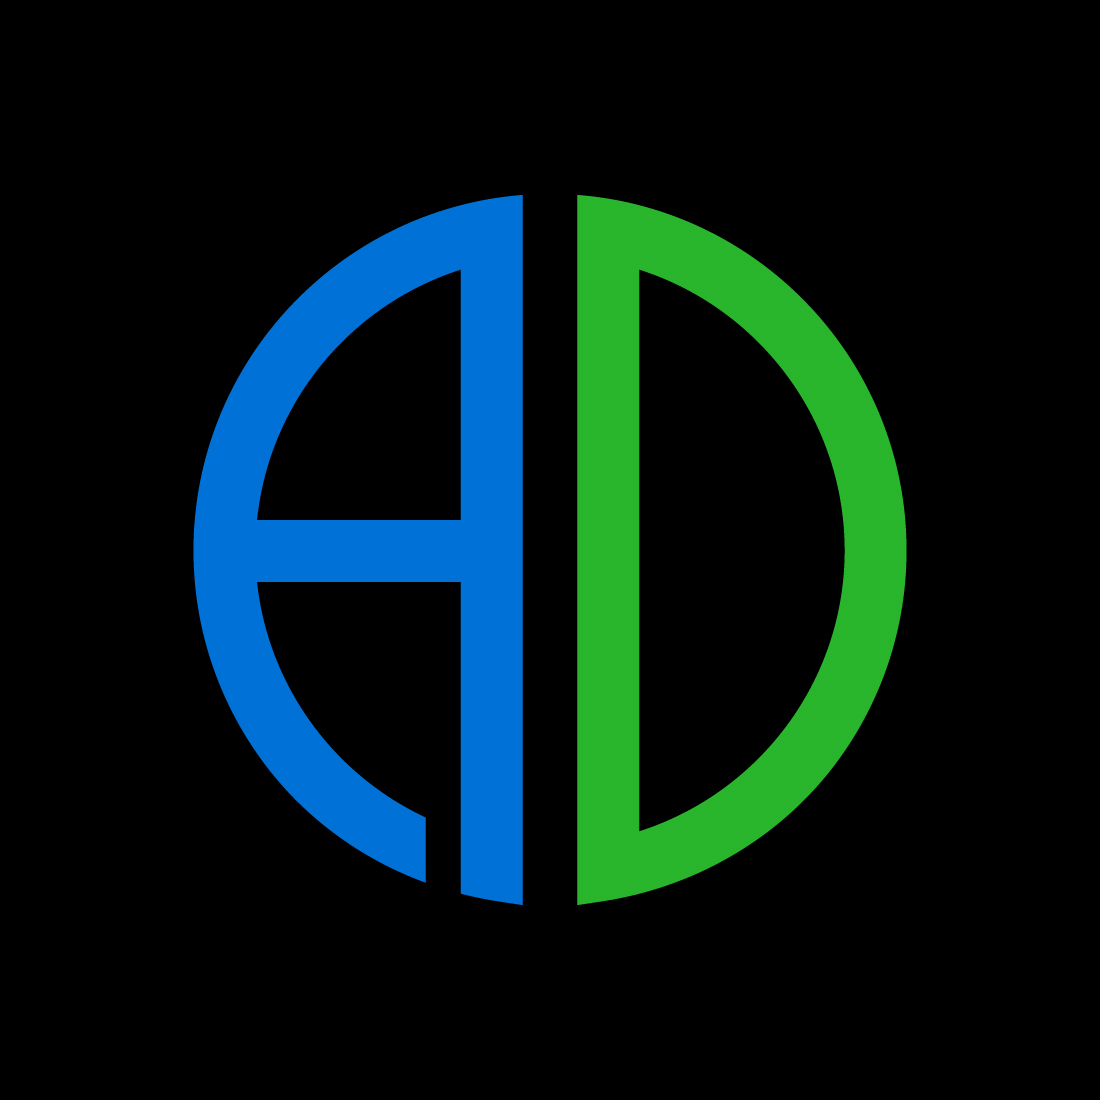 Initial AD Letter logo design, Vector design concept cover image.